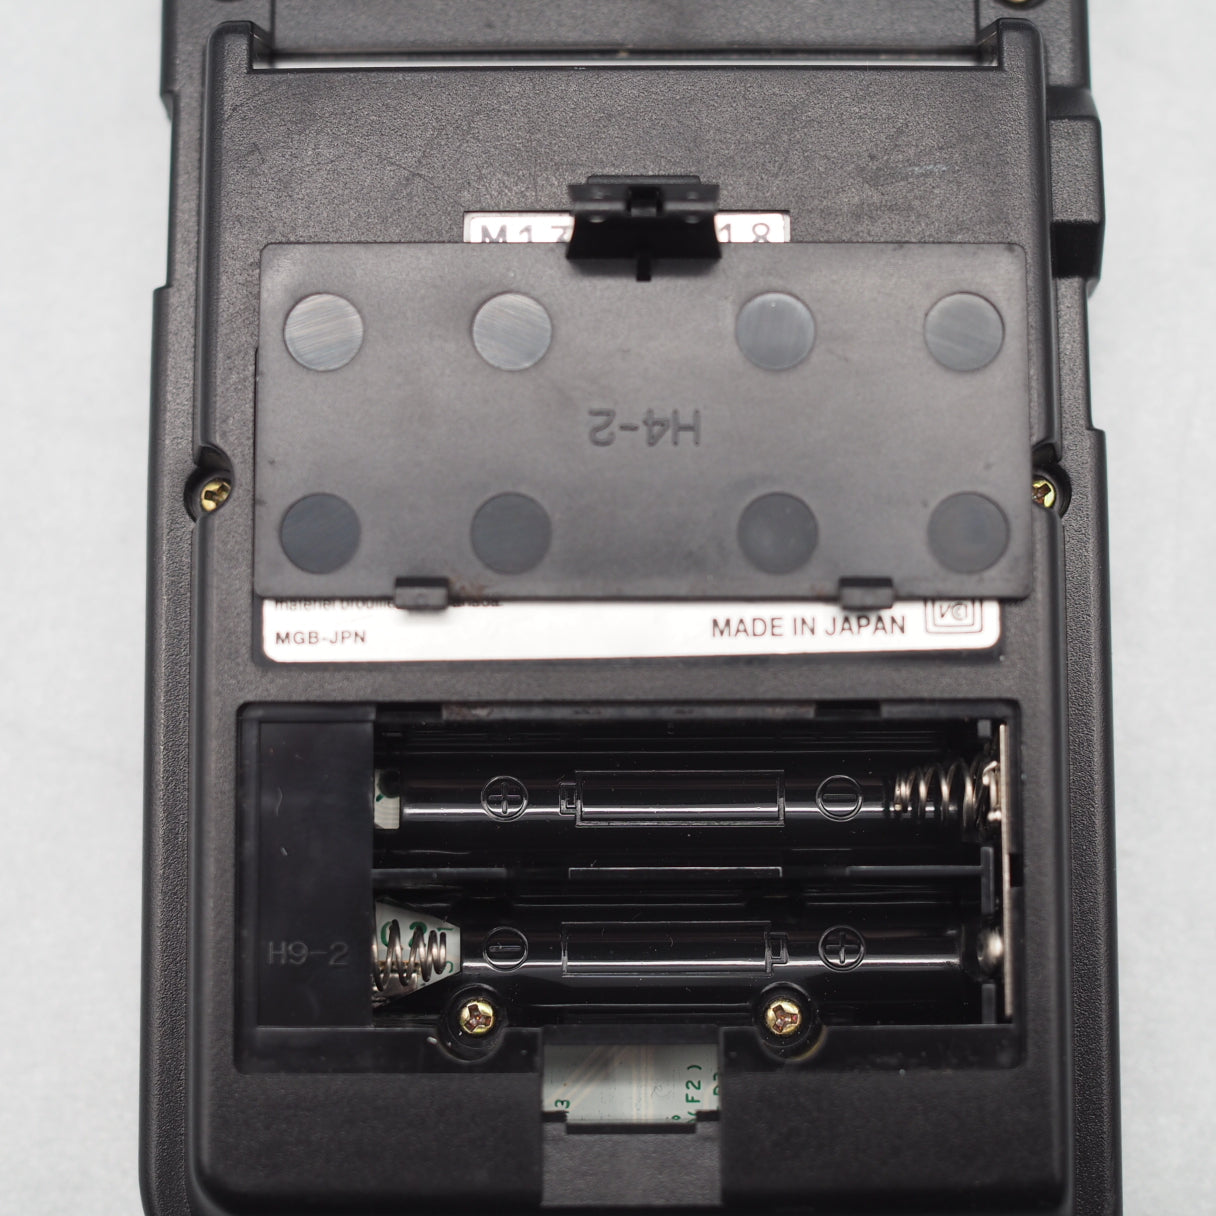 Nintendo GAMEBOY Pocket Console MGB-001 [Black]